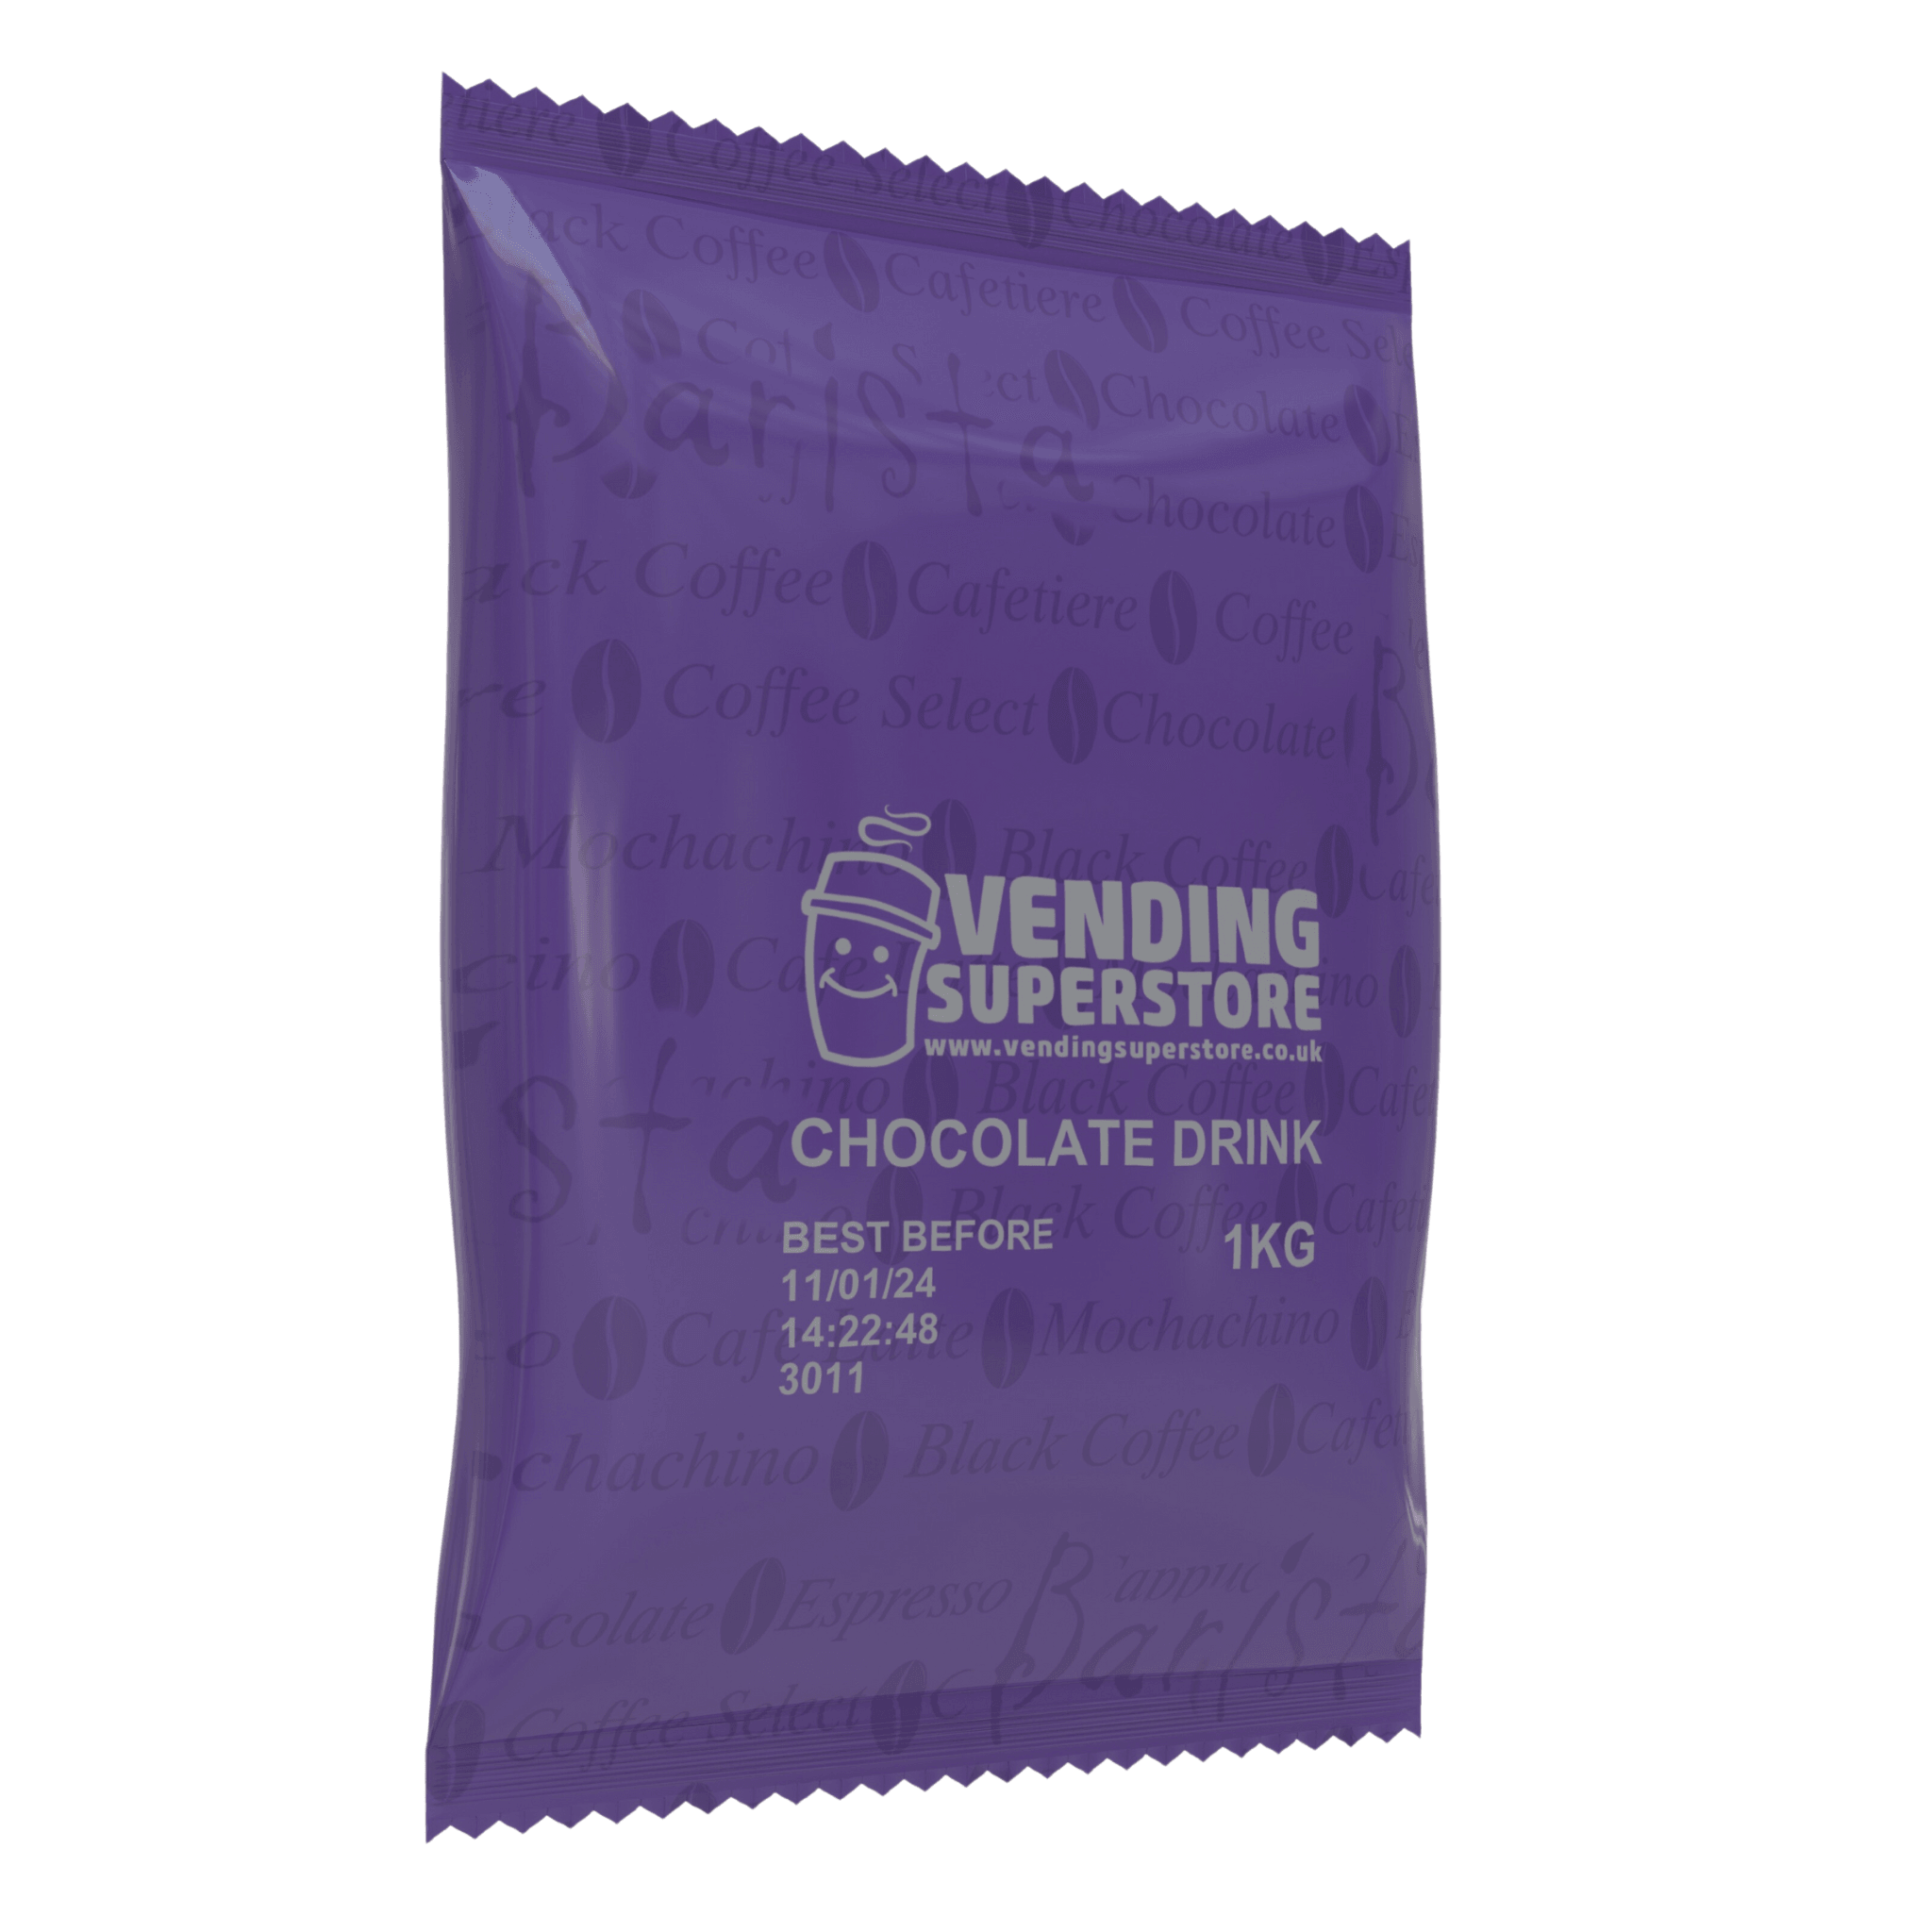 Vending Superstore - Chocolate Drink, Vending Machine Hot Chocolate - Single 1KG Bag - Vending Superstore